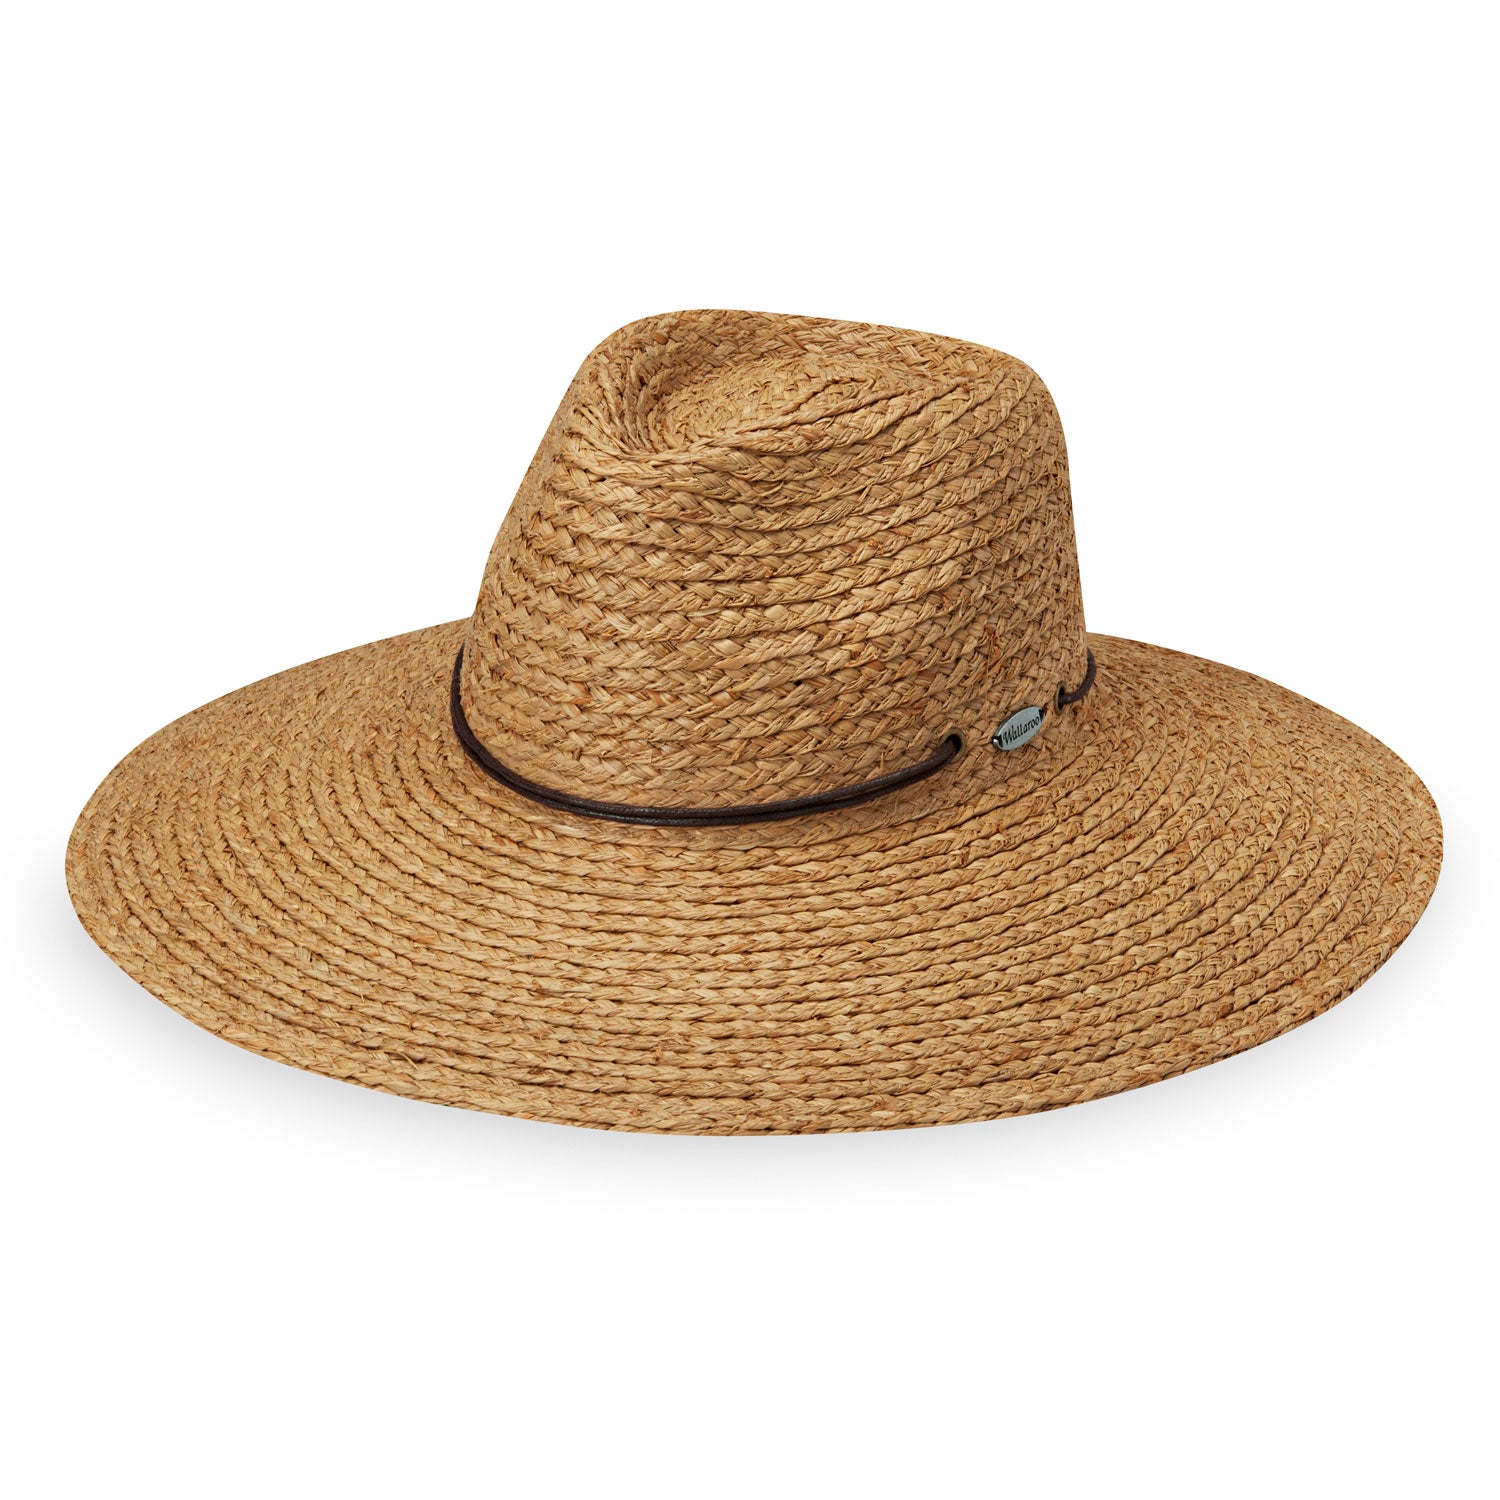 Featuring Women's UPF Big Wide Brim Fedora Style Nosara Straw Sun Hat in Camel from Wallaroo